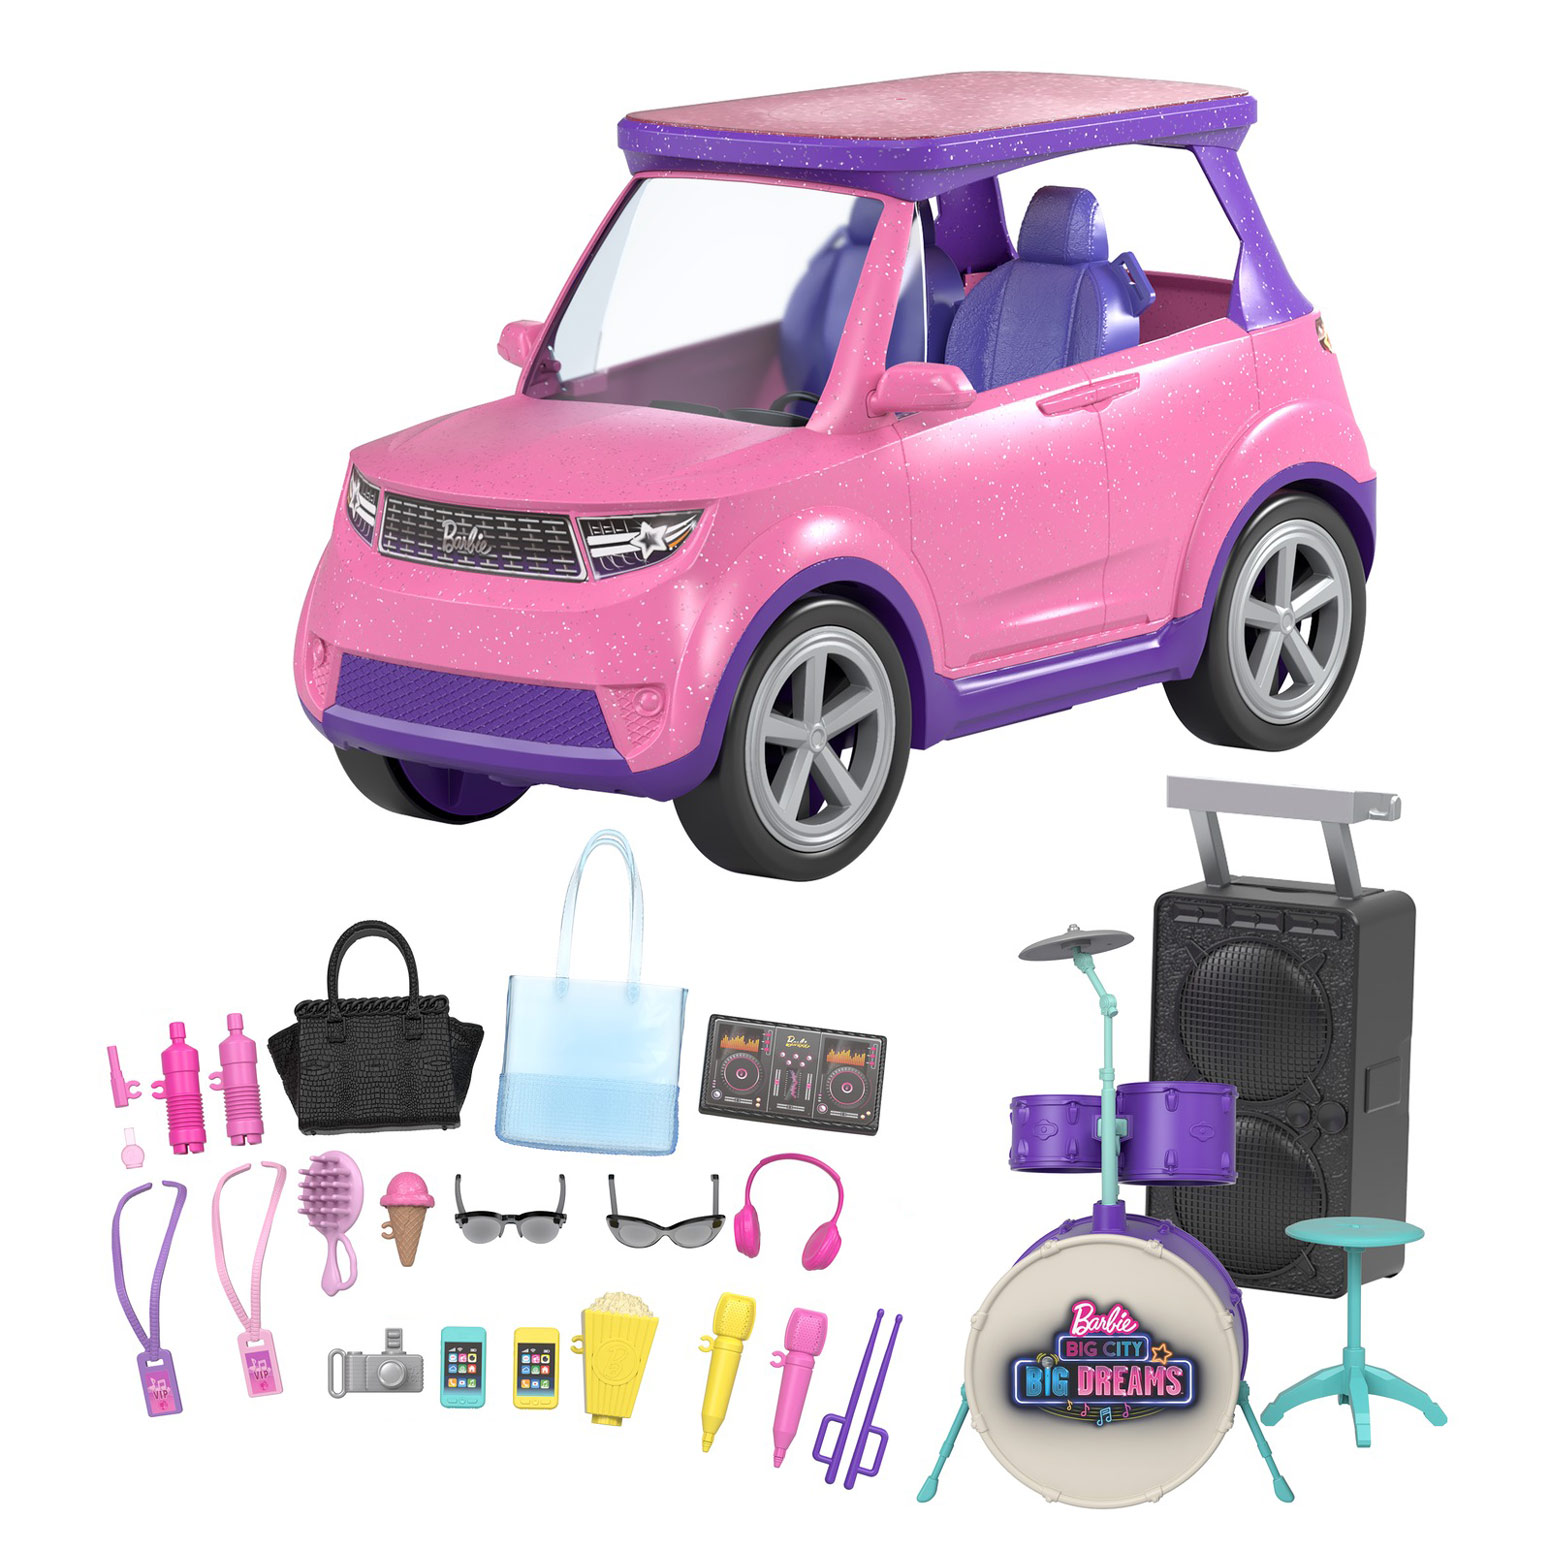 roltrap Veronderstelling sarcoom Barbie Big City Big Dreams Car | Thimble Toys